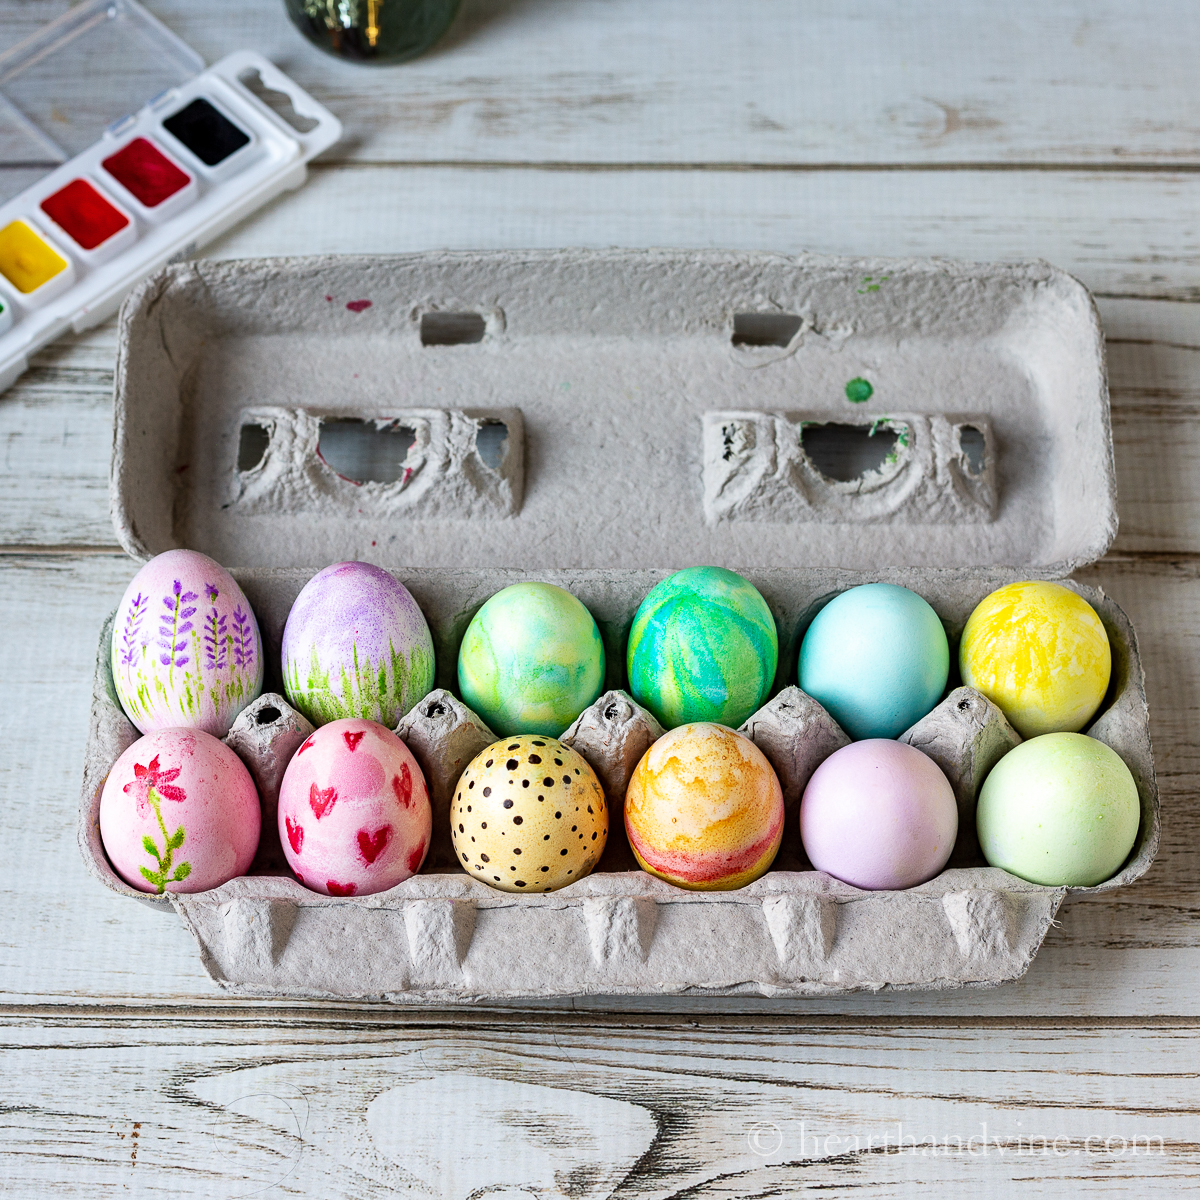 Watercolor Easter eggs in a cardboard carton.